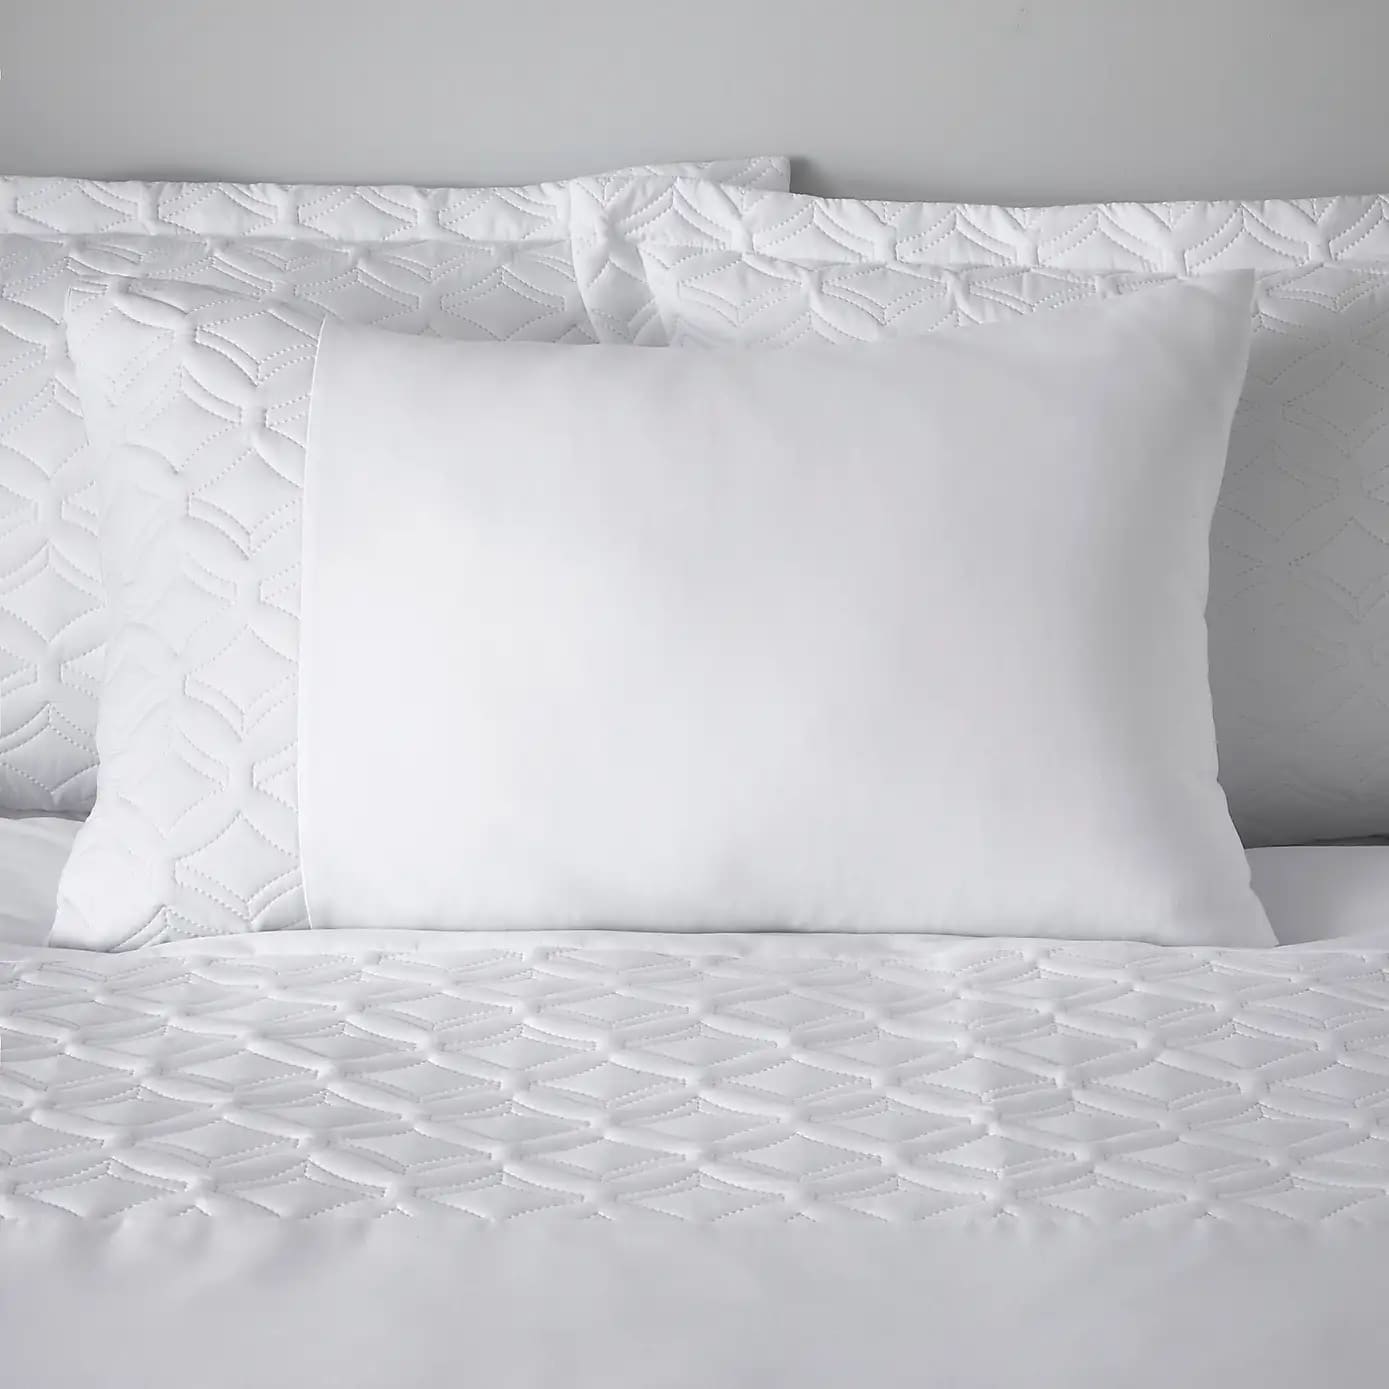 Kensington-Pinsonic-Duvet-Cover-and-Pillowcase-Set-White